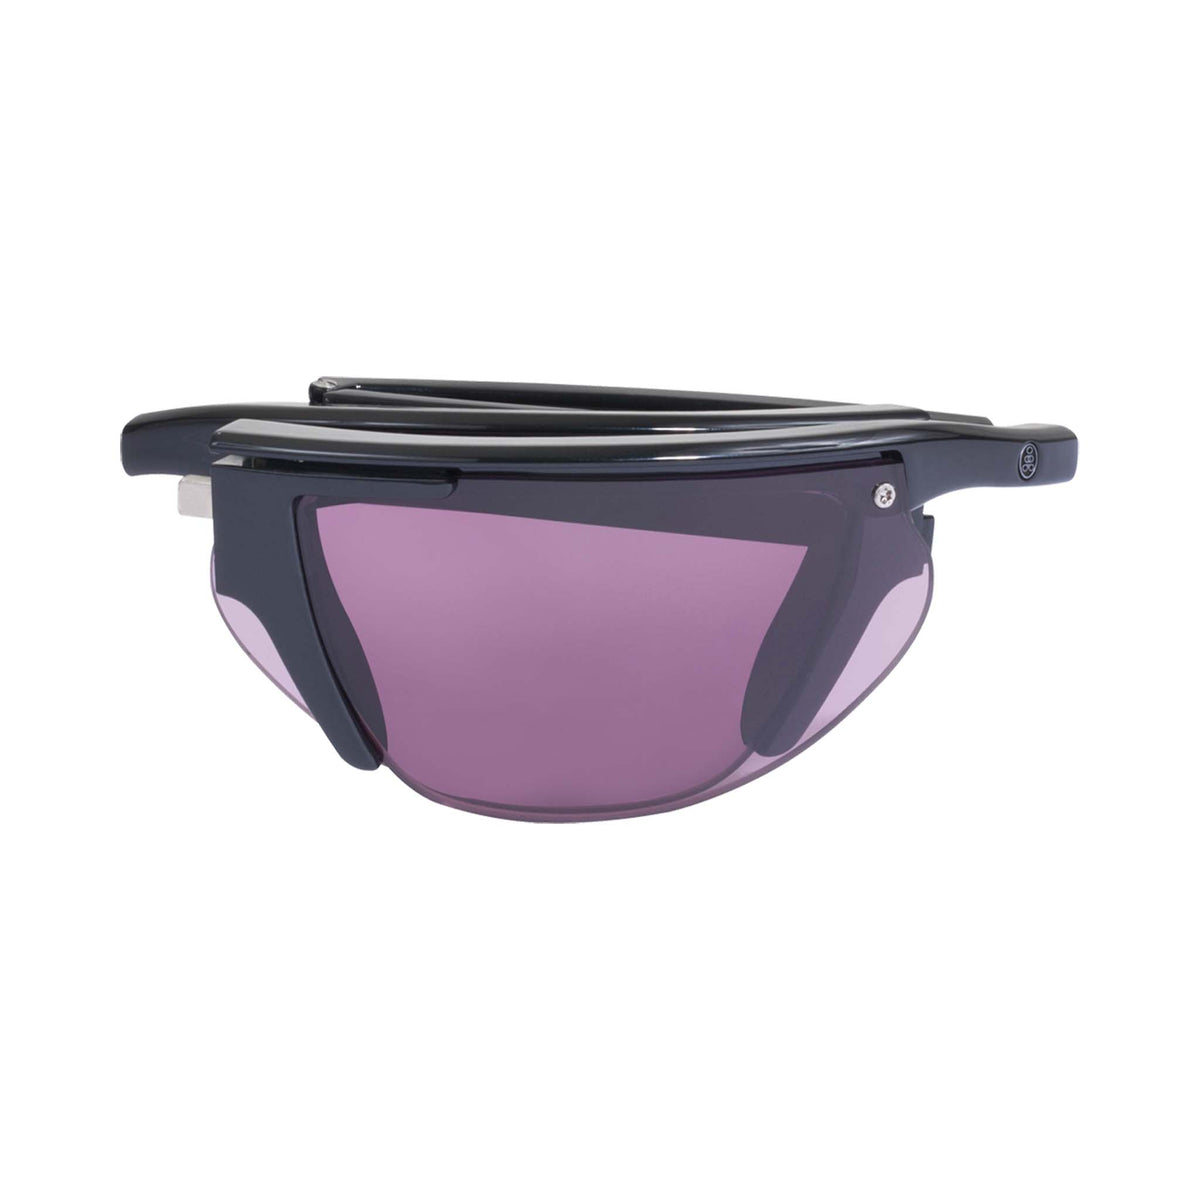 Popticals, Premium Compact Sunglasses, PopTrail, 200081-BGVS, Standard Golf Sunglasses, Gloss Black Frame, Violet Golf Lenses, Compact View